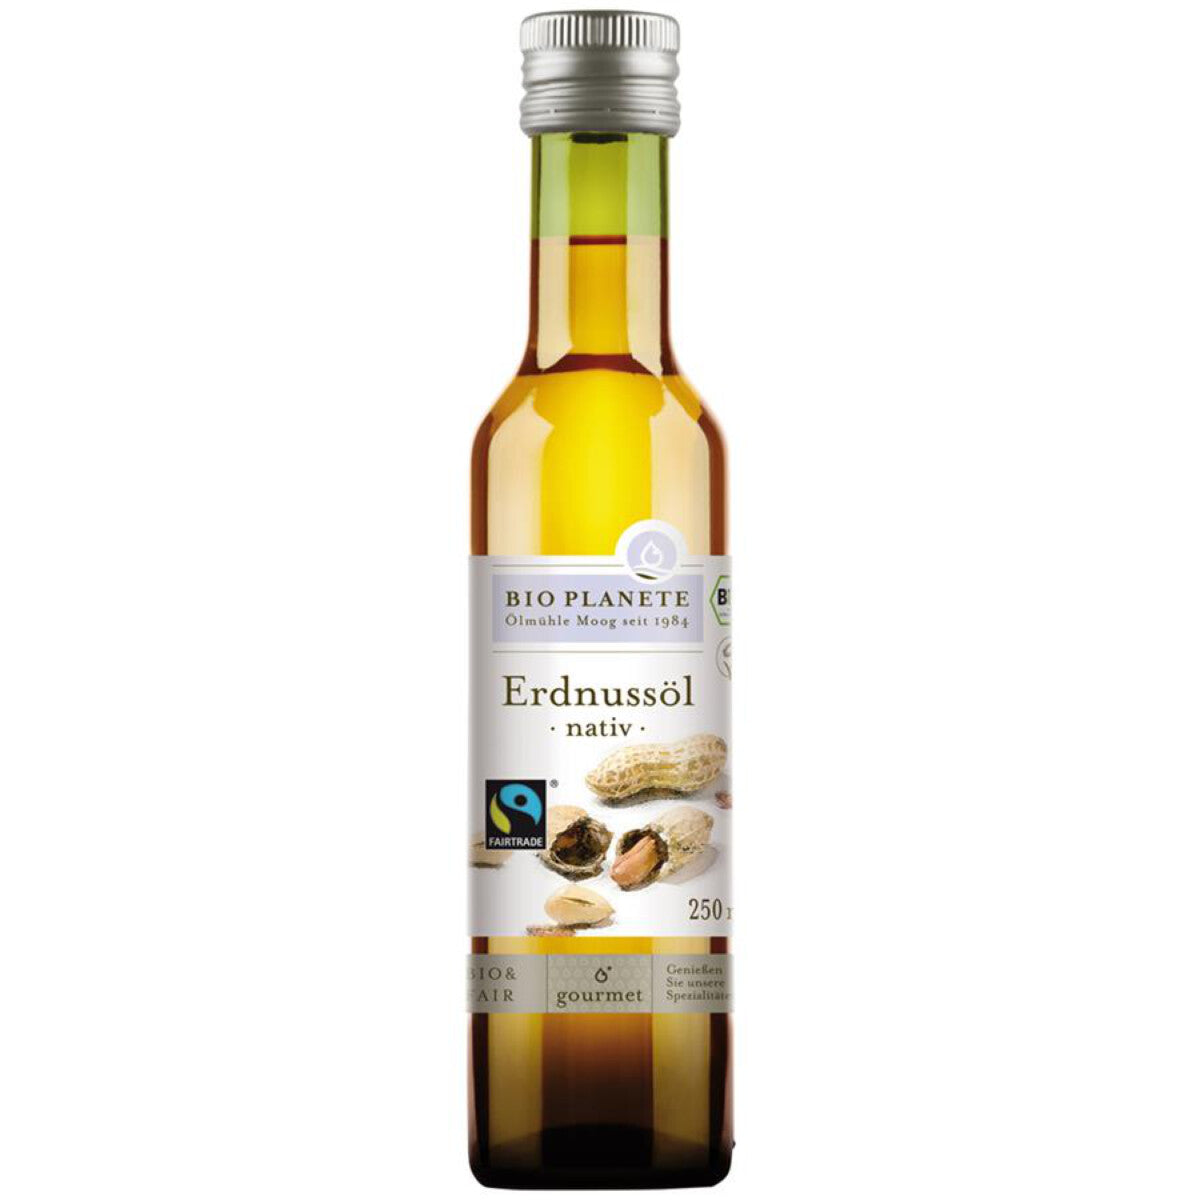 BIO PLANETE GOURMET Erdnussöl nativ - 0,25 l